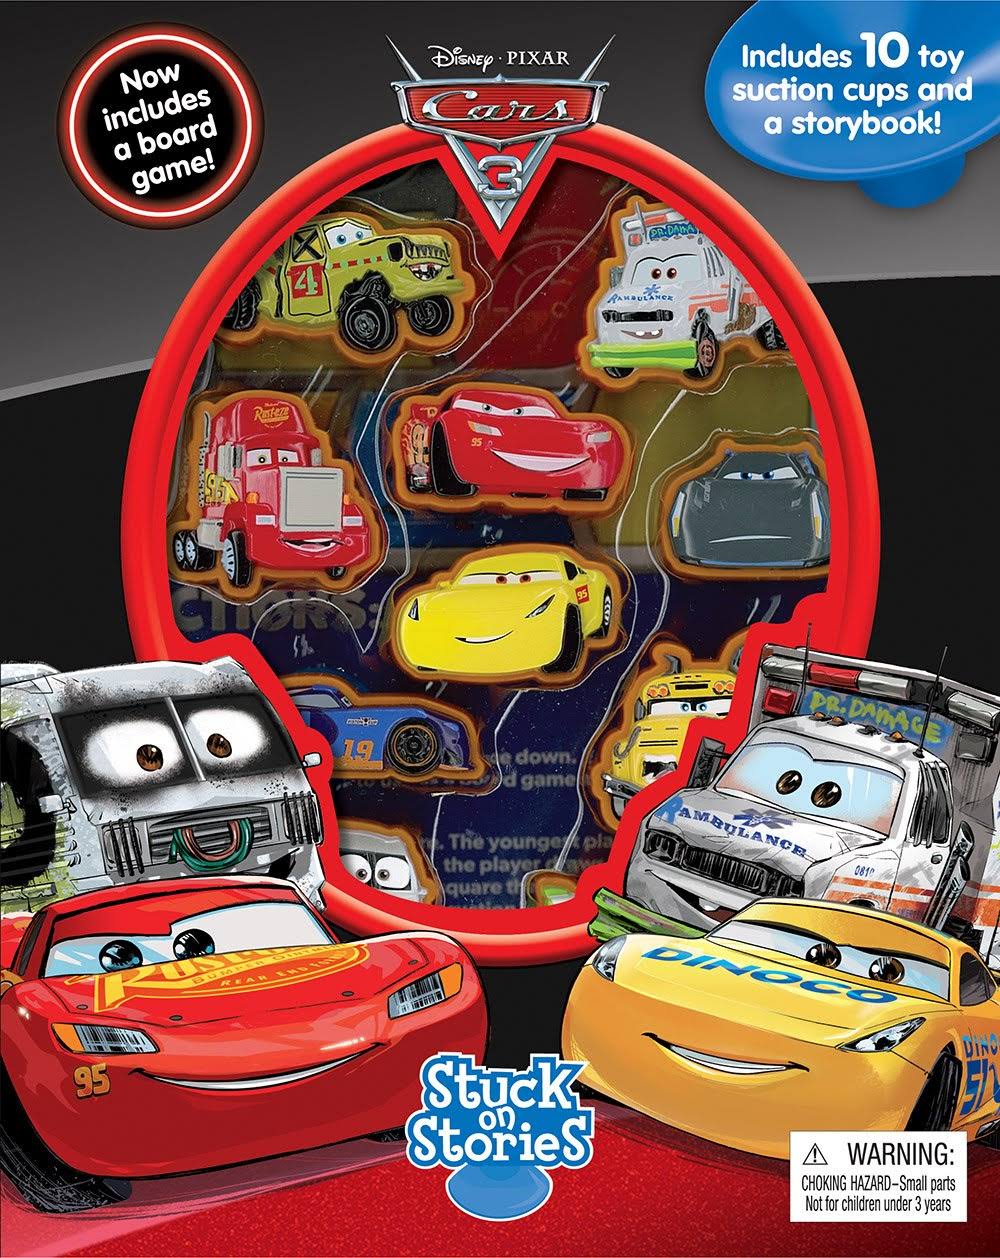 Disney/Pixar Cars 3 Stuck on Stories